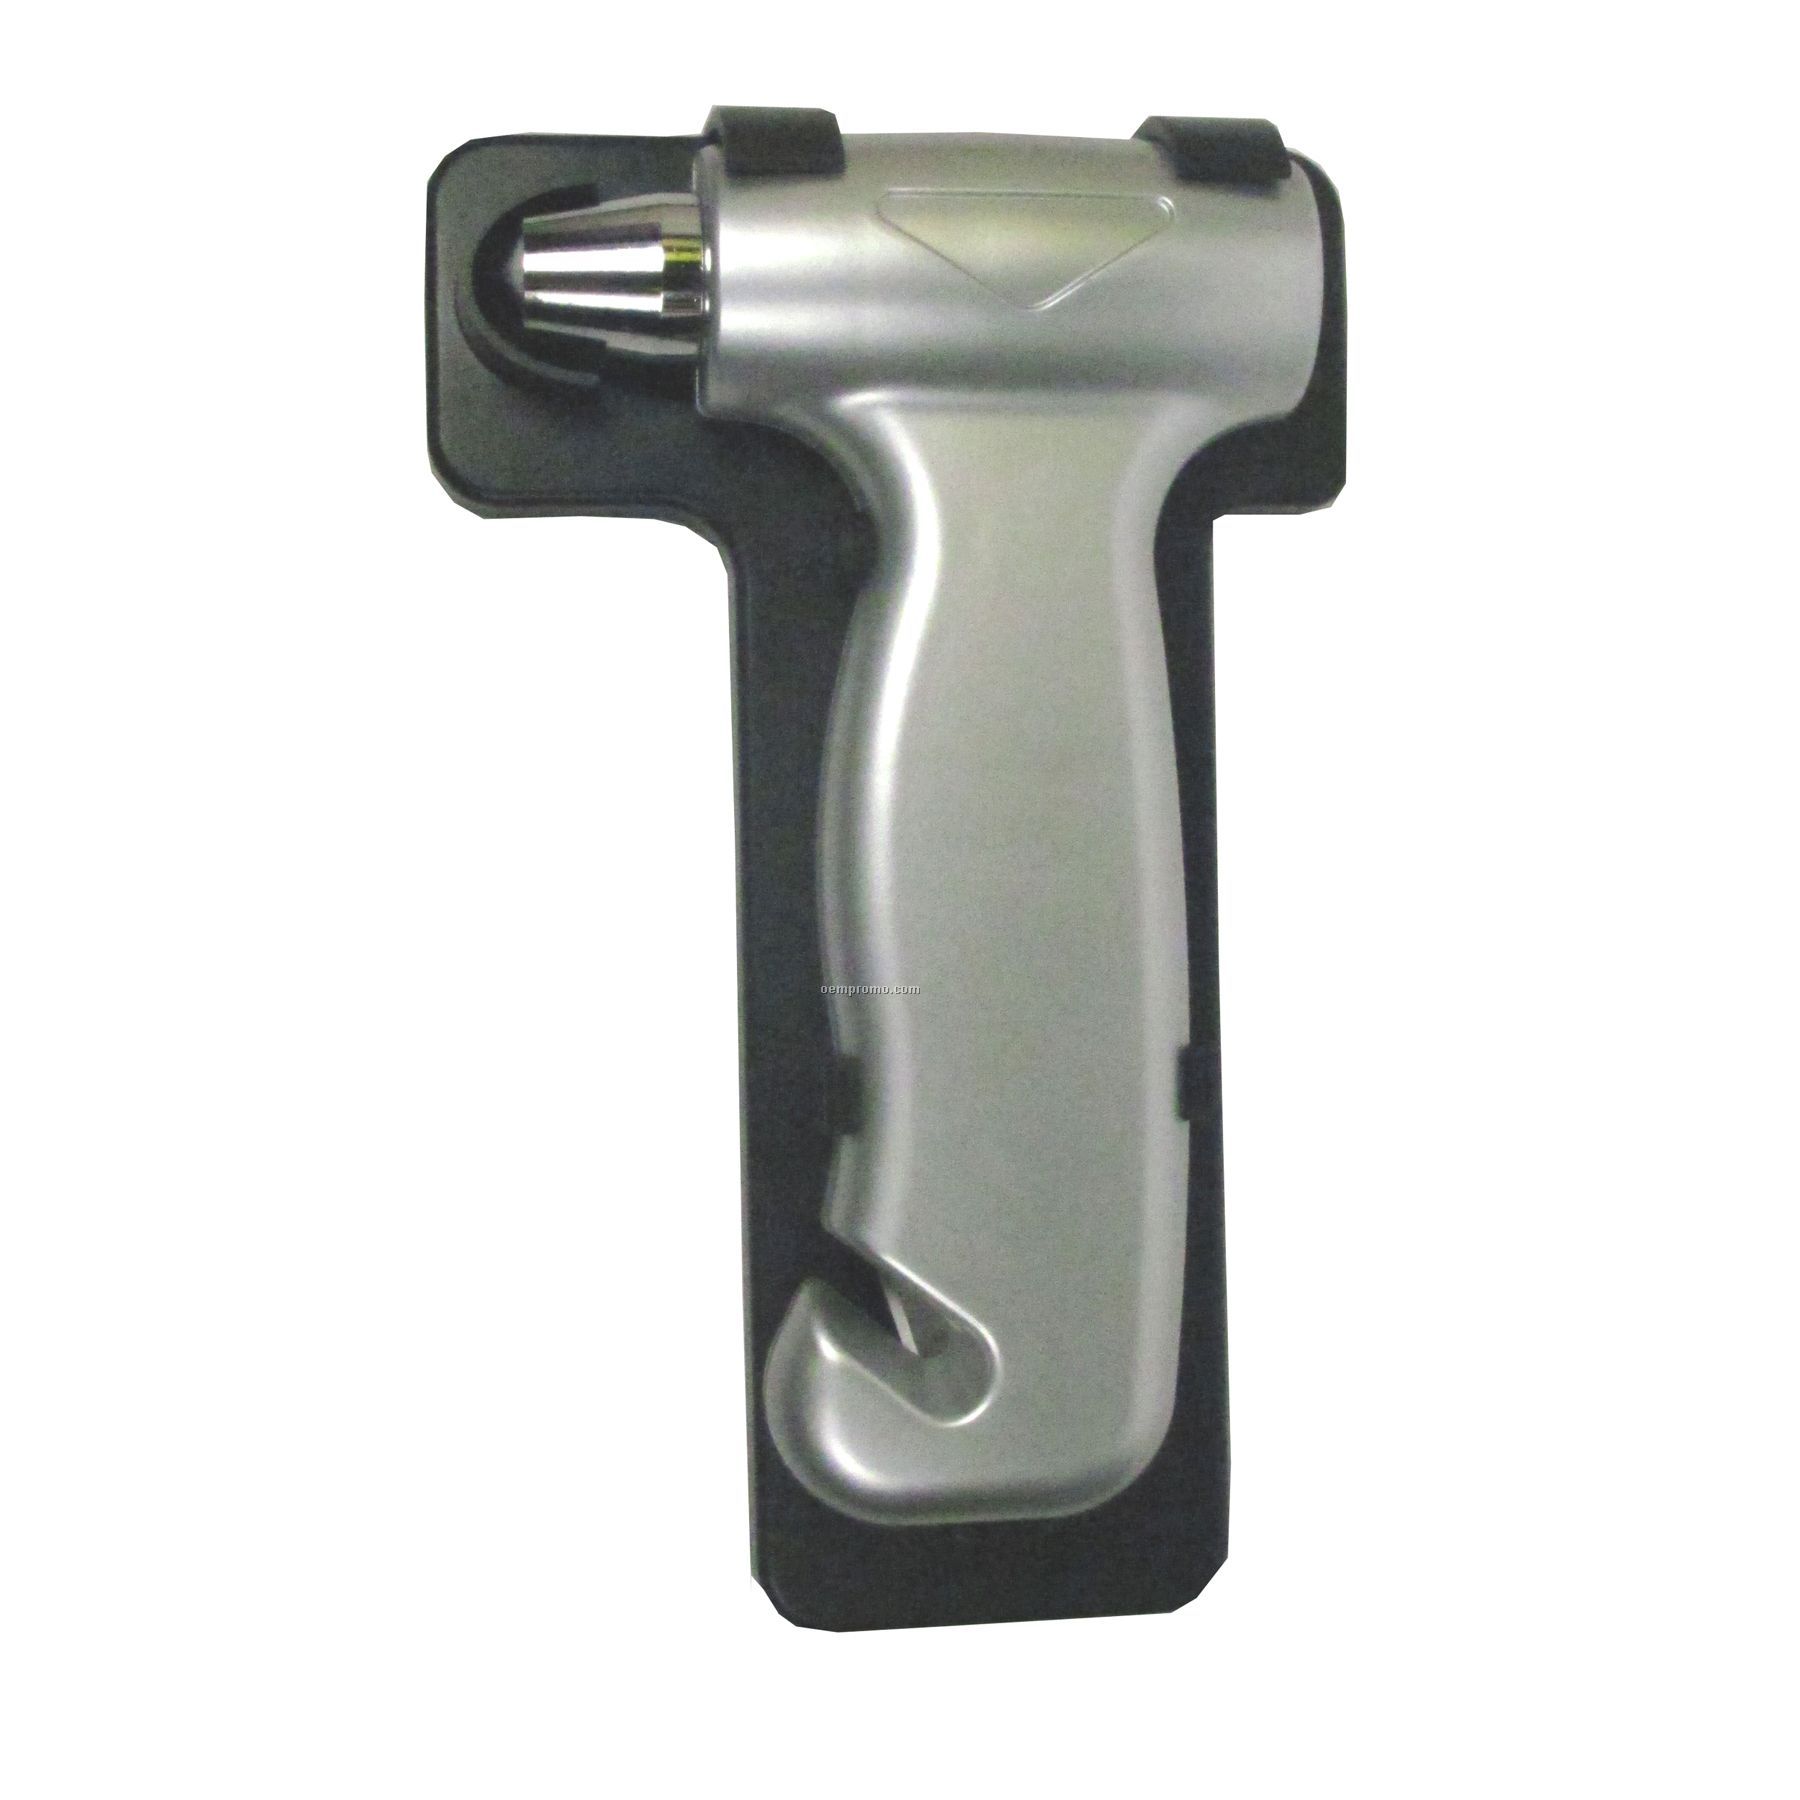 Auto Emergency Hammer Flashlight With Seatbelt Cutter